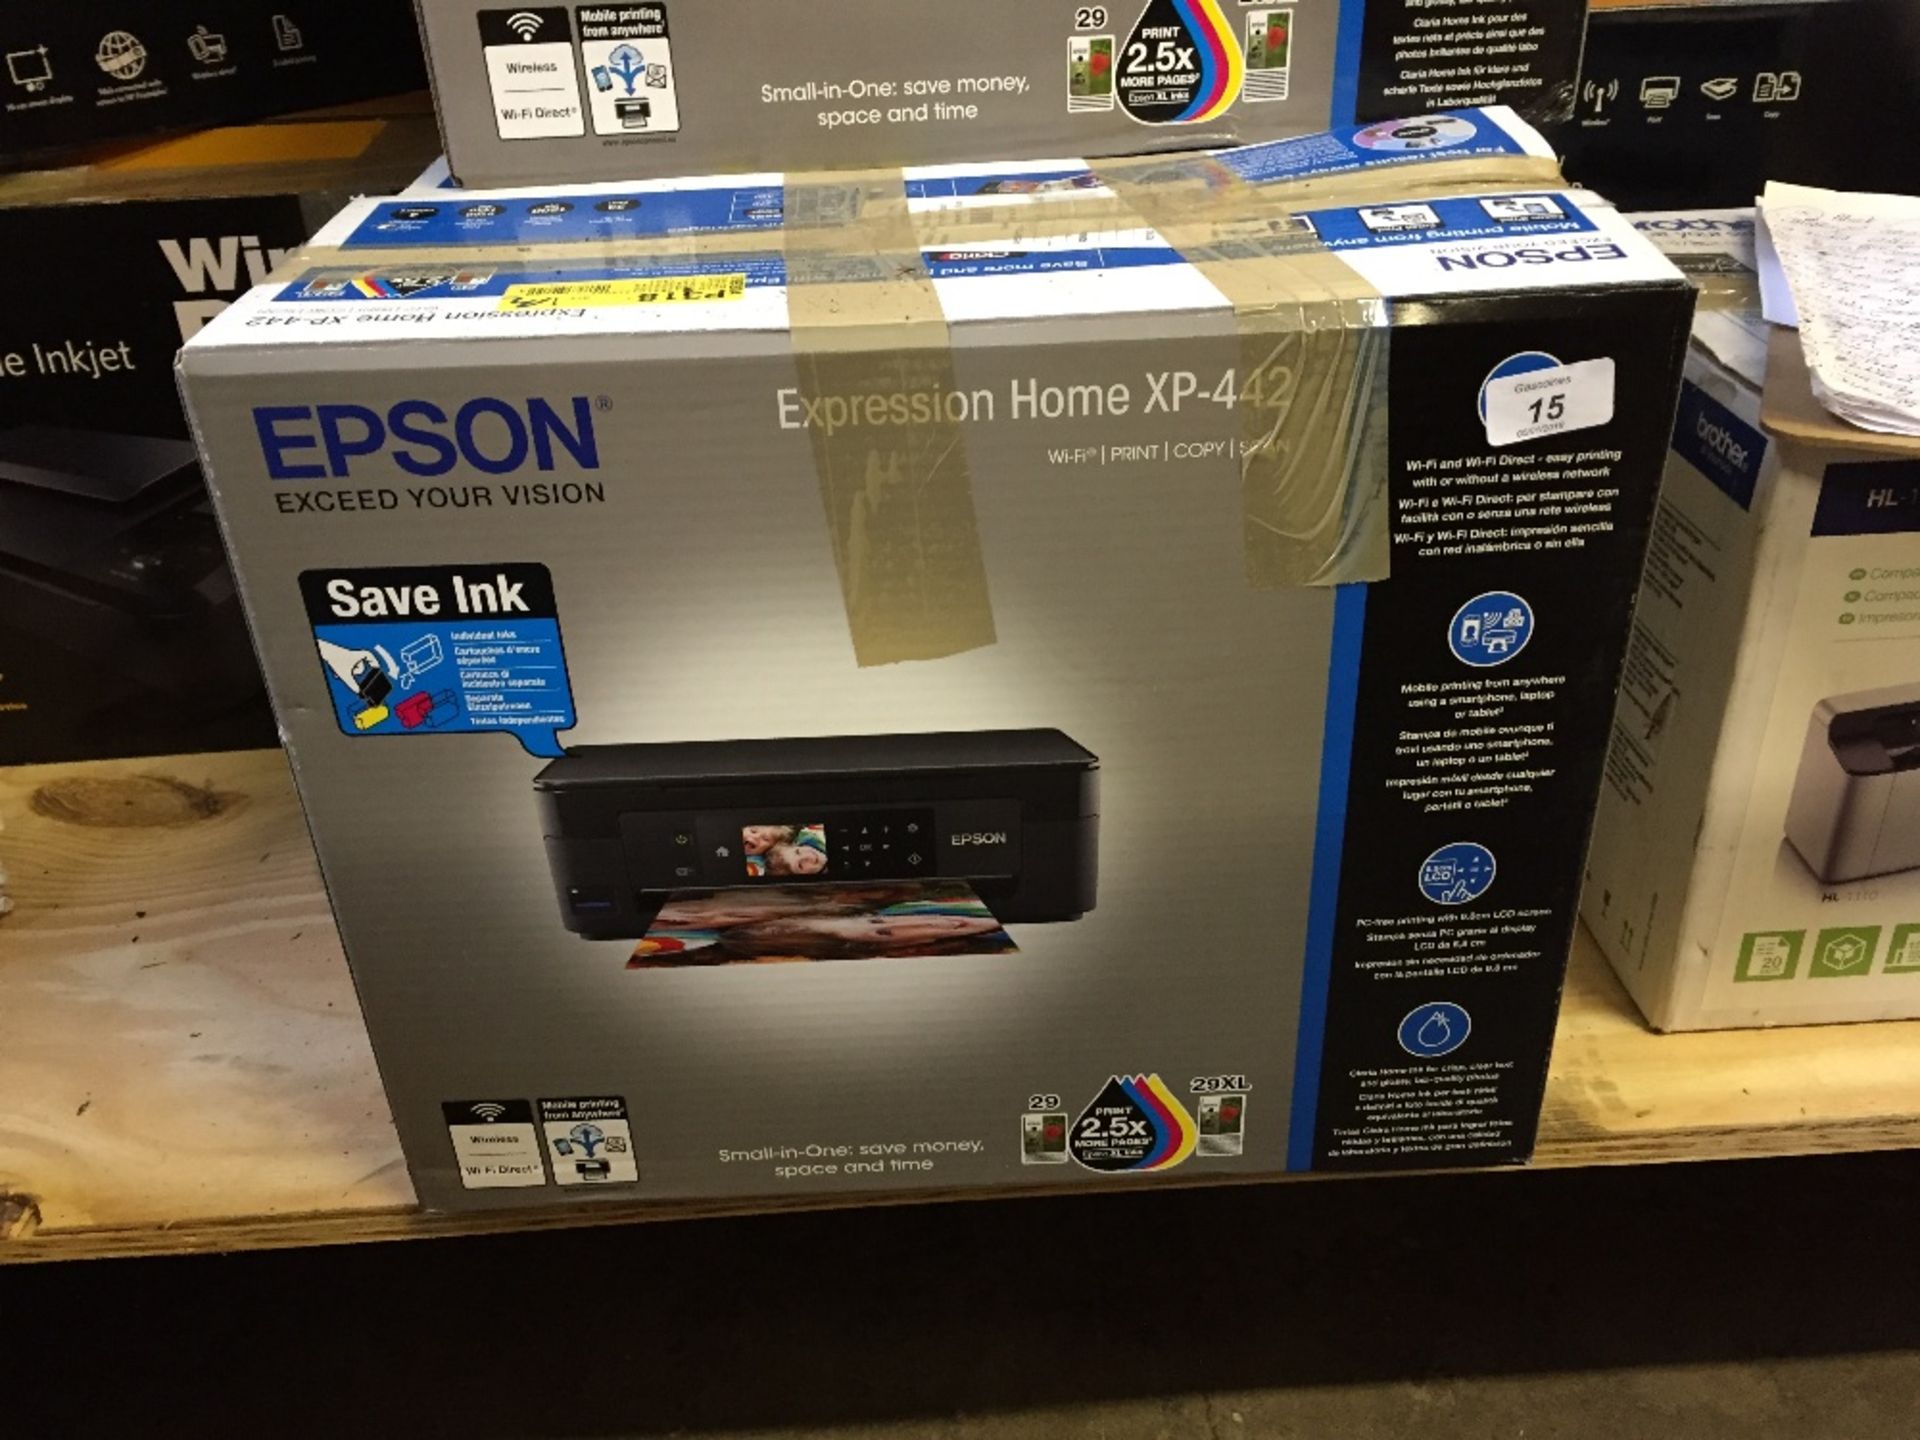 Epson Expression Home XP442 printer (return)